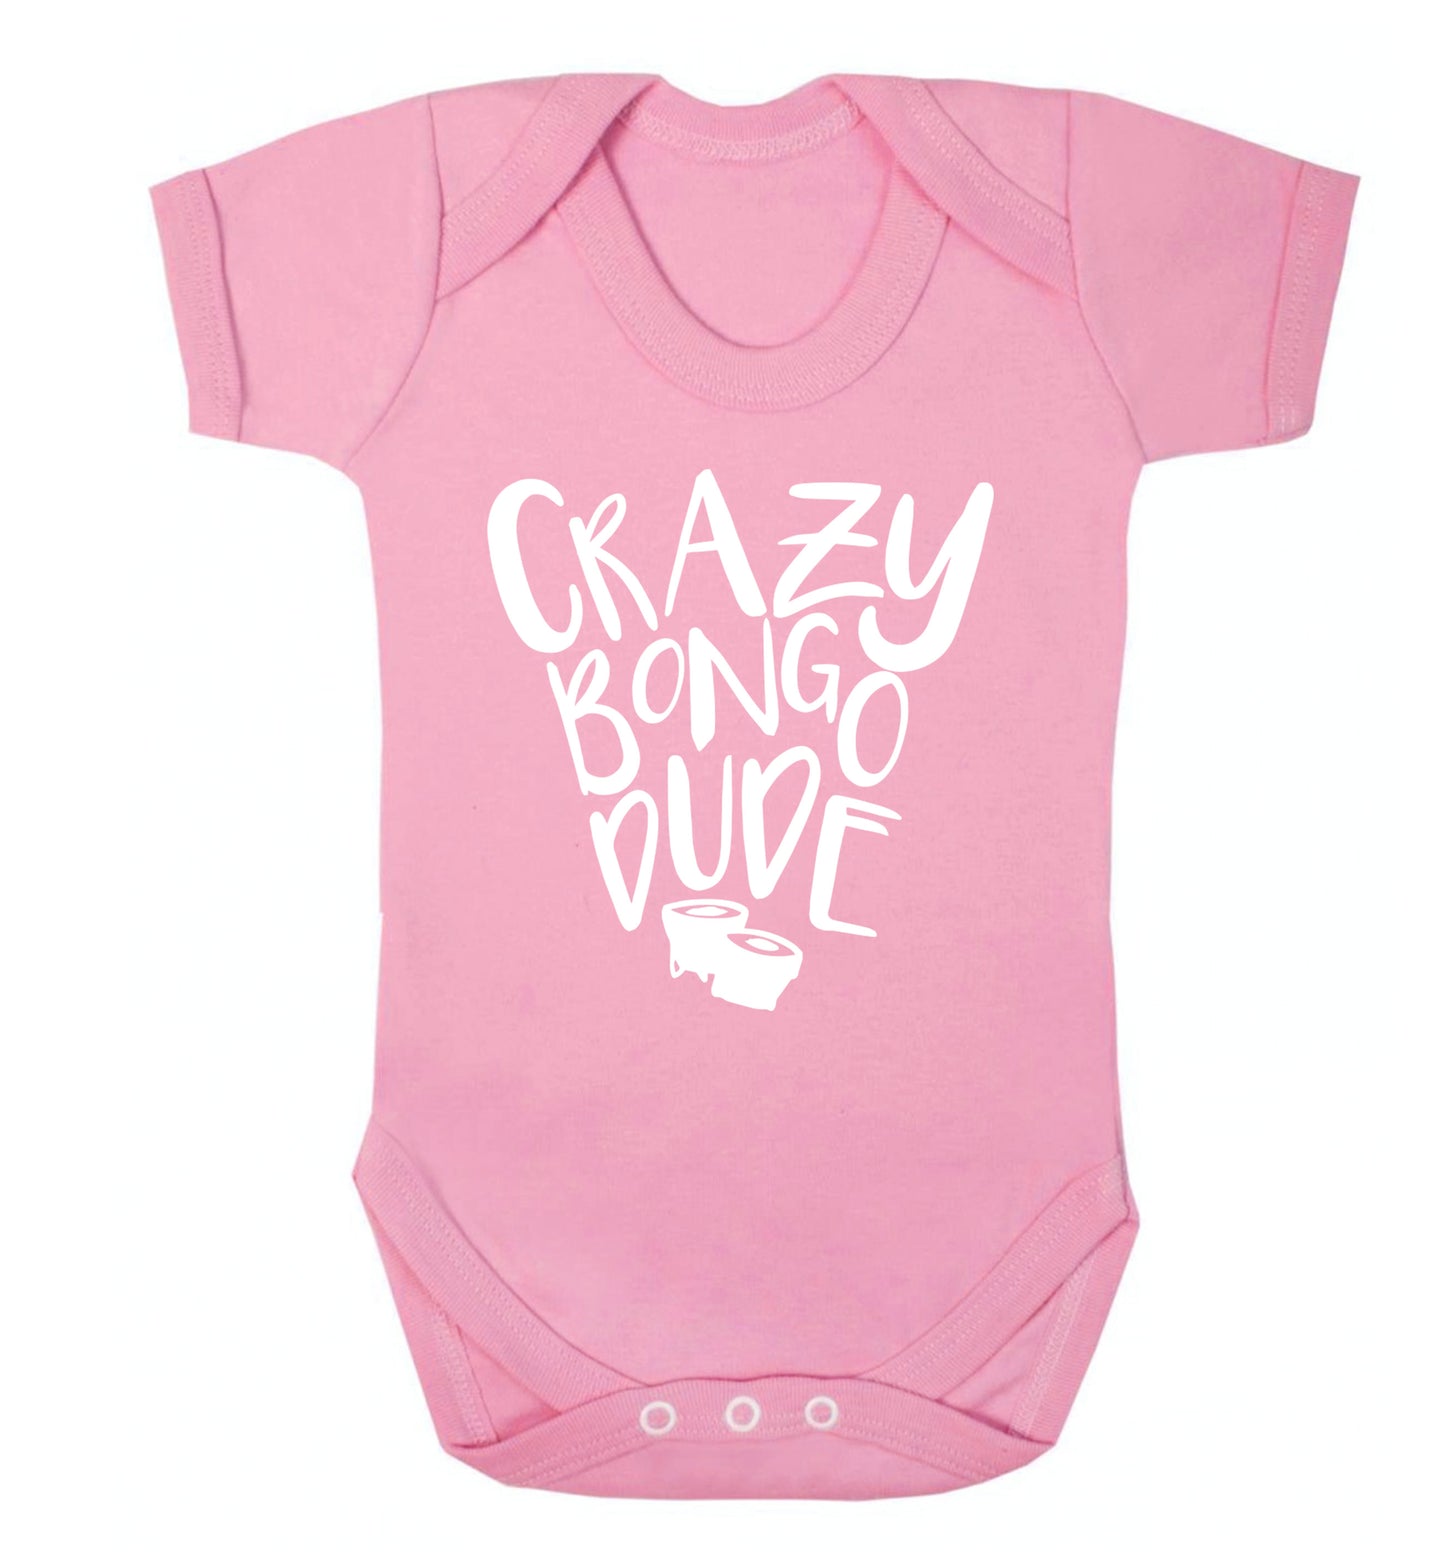 Crazy bongo dude Baby Vest pale pink 18-24 months